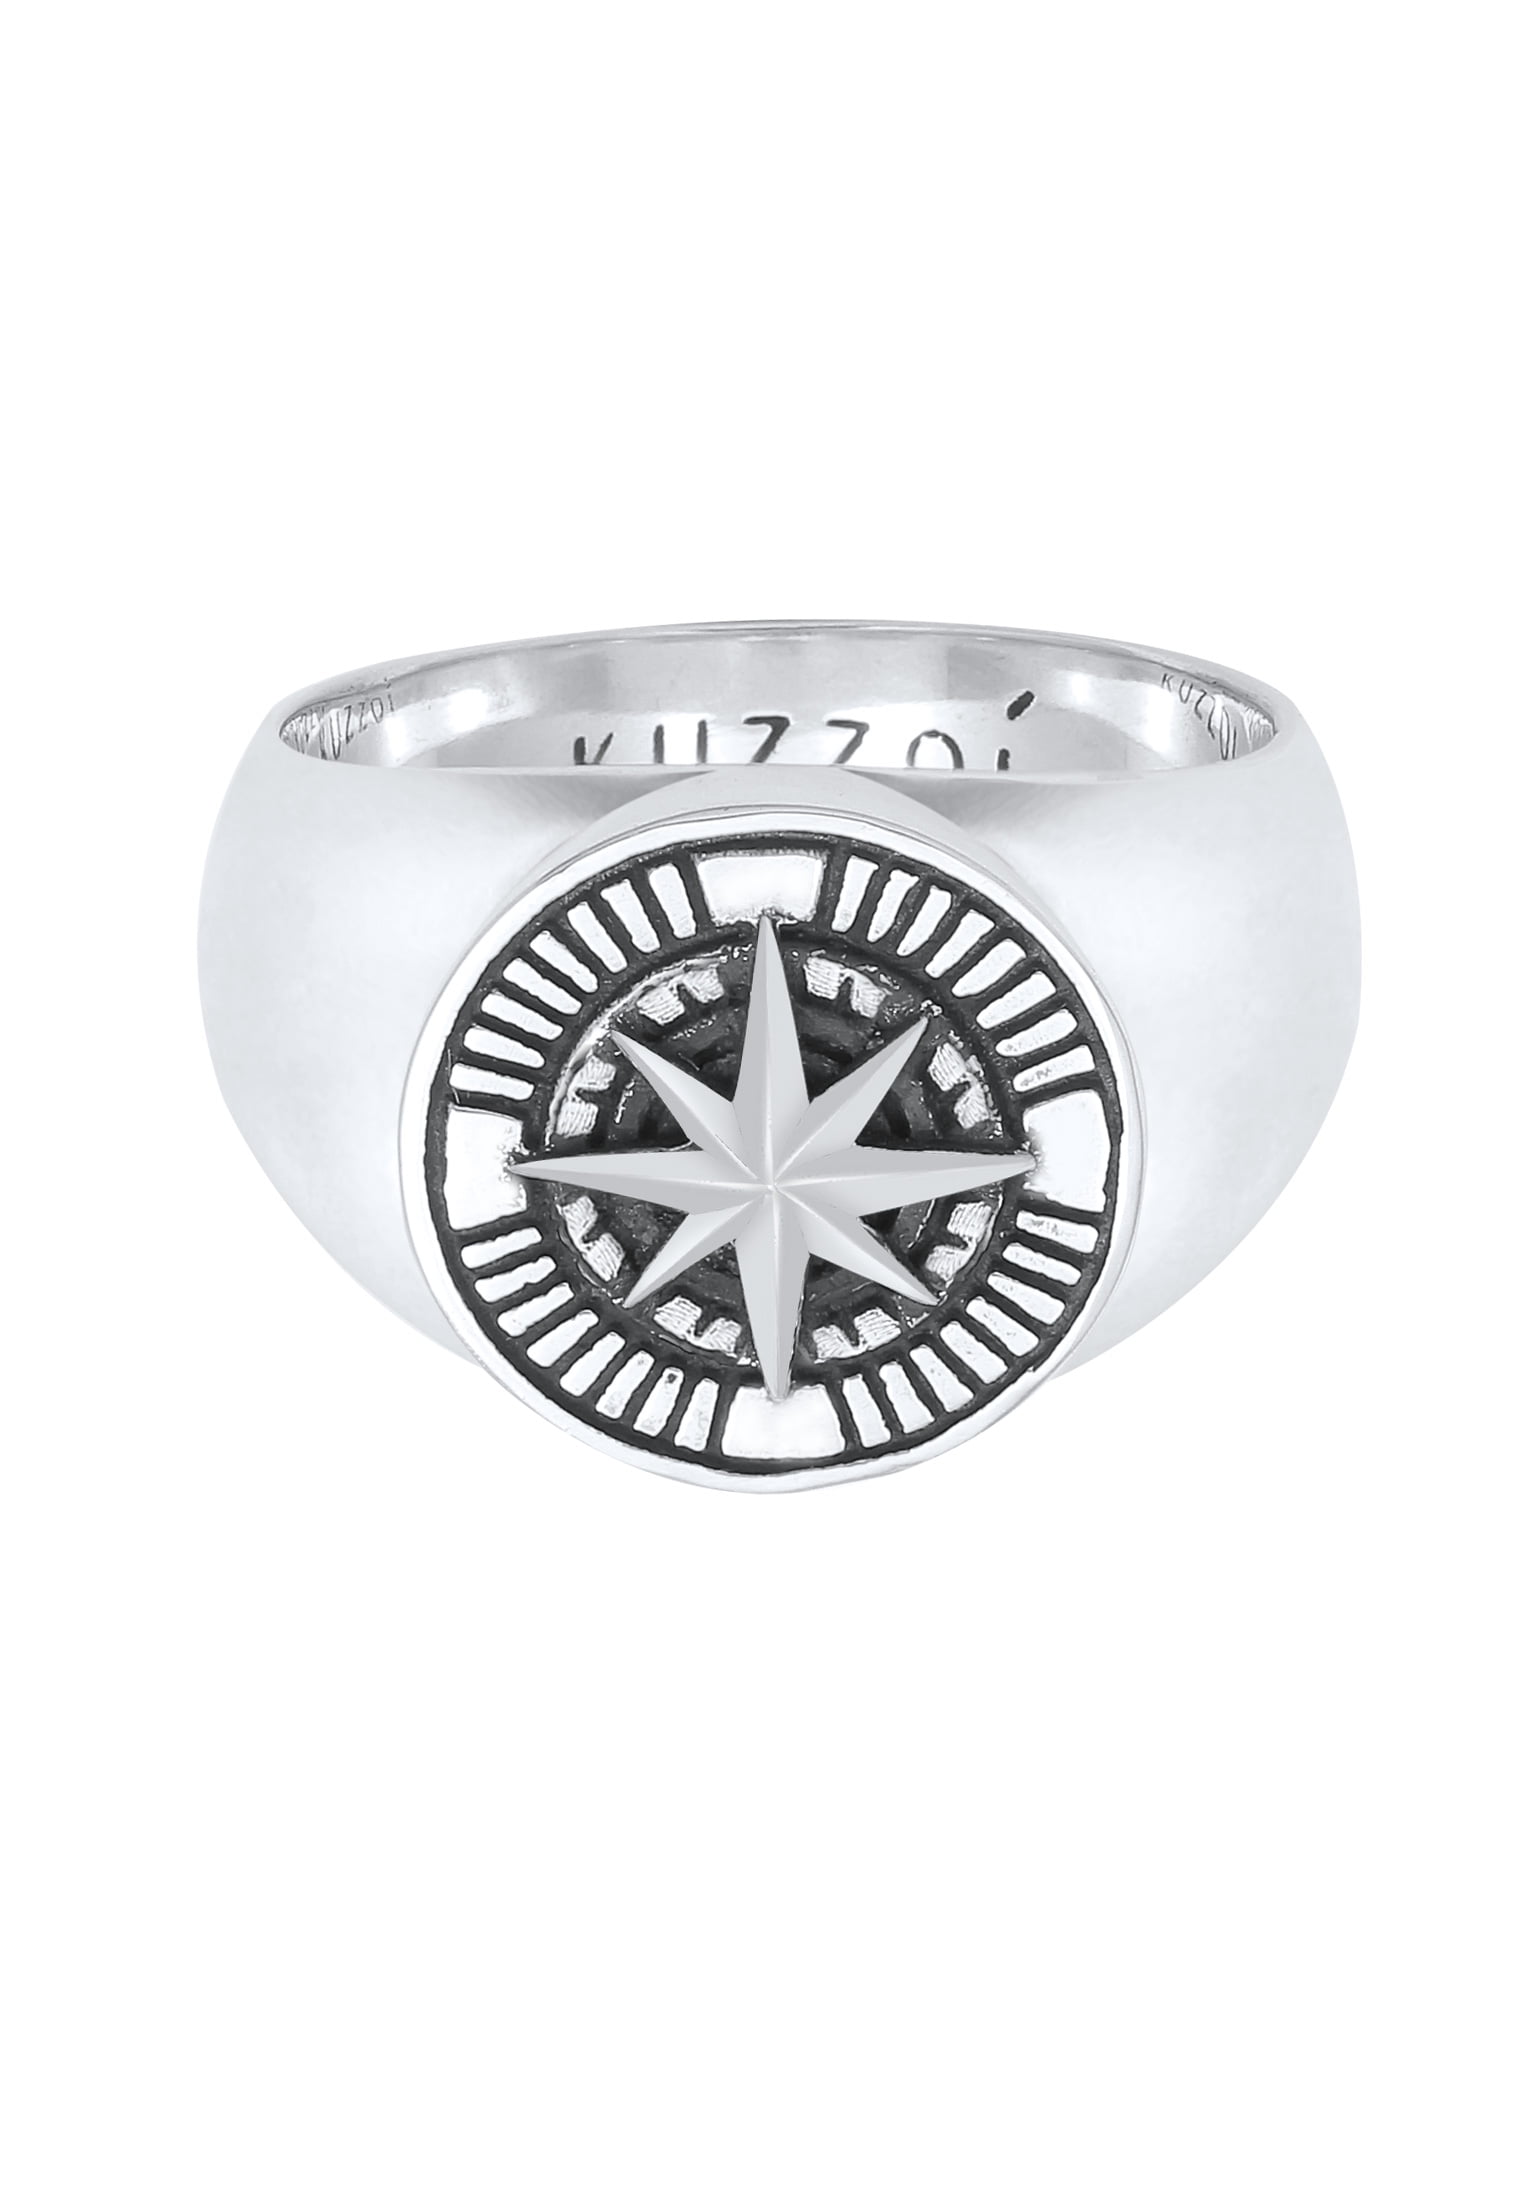 KUZZOI Men's Signet Ring Compass 925 Silver 14K Gold Plated Size 9-11